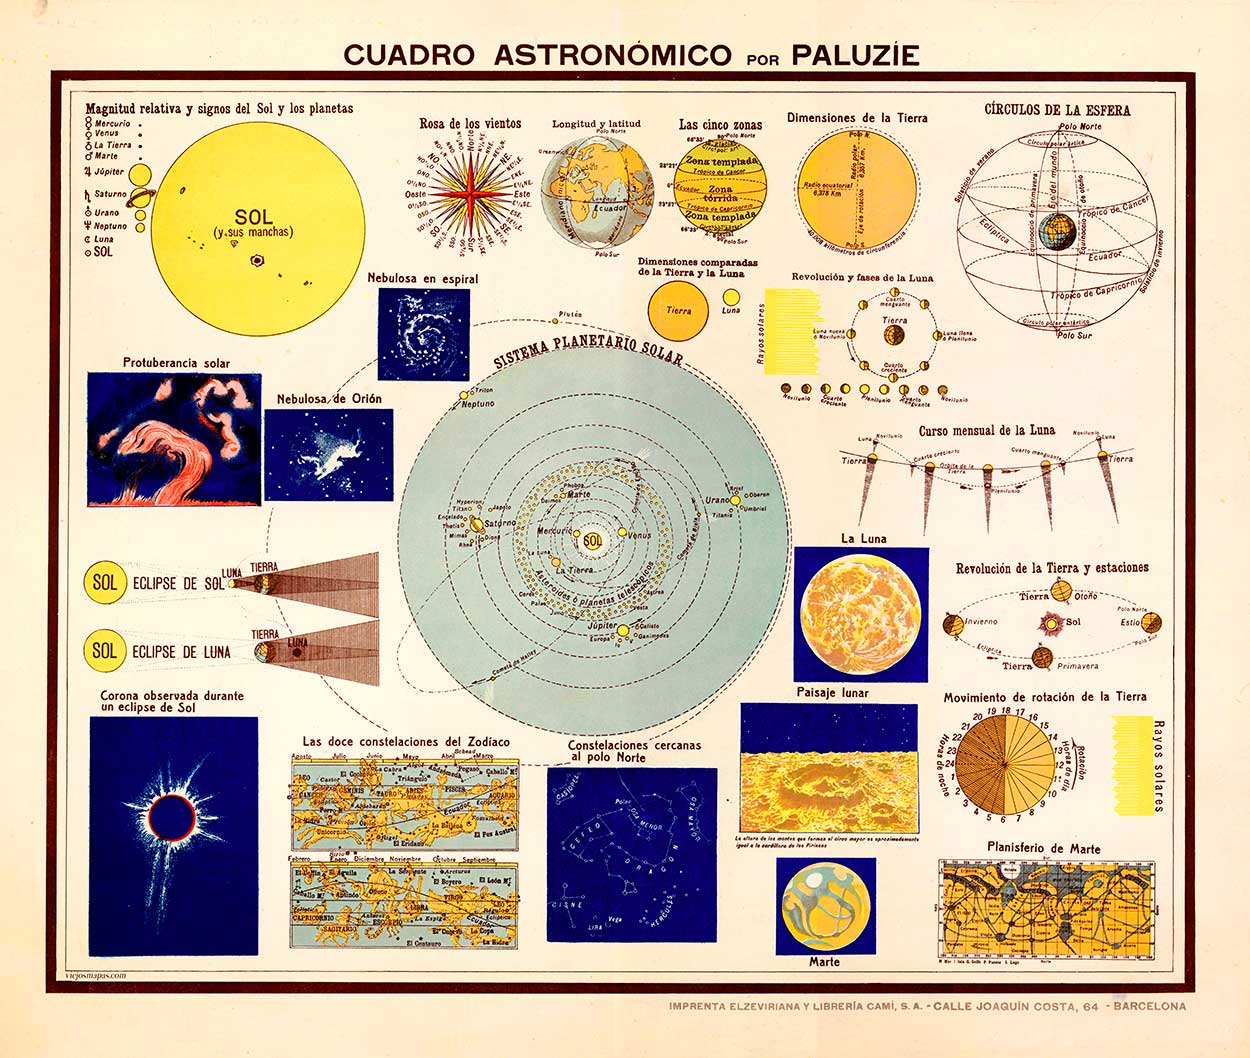 Cuadro astronómico, Editorial Paluzie, 1930